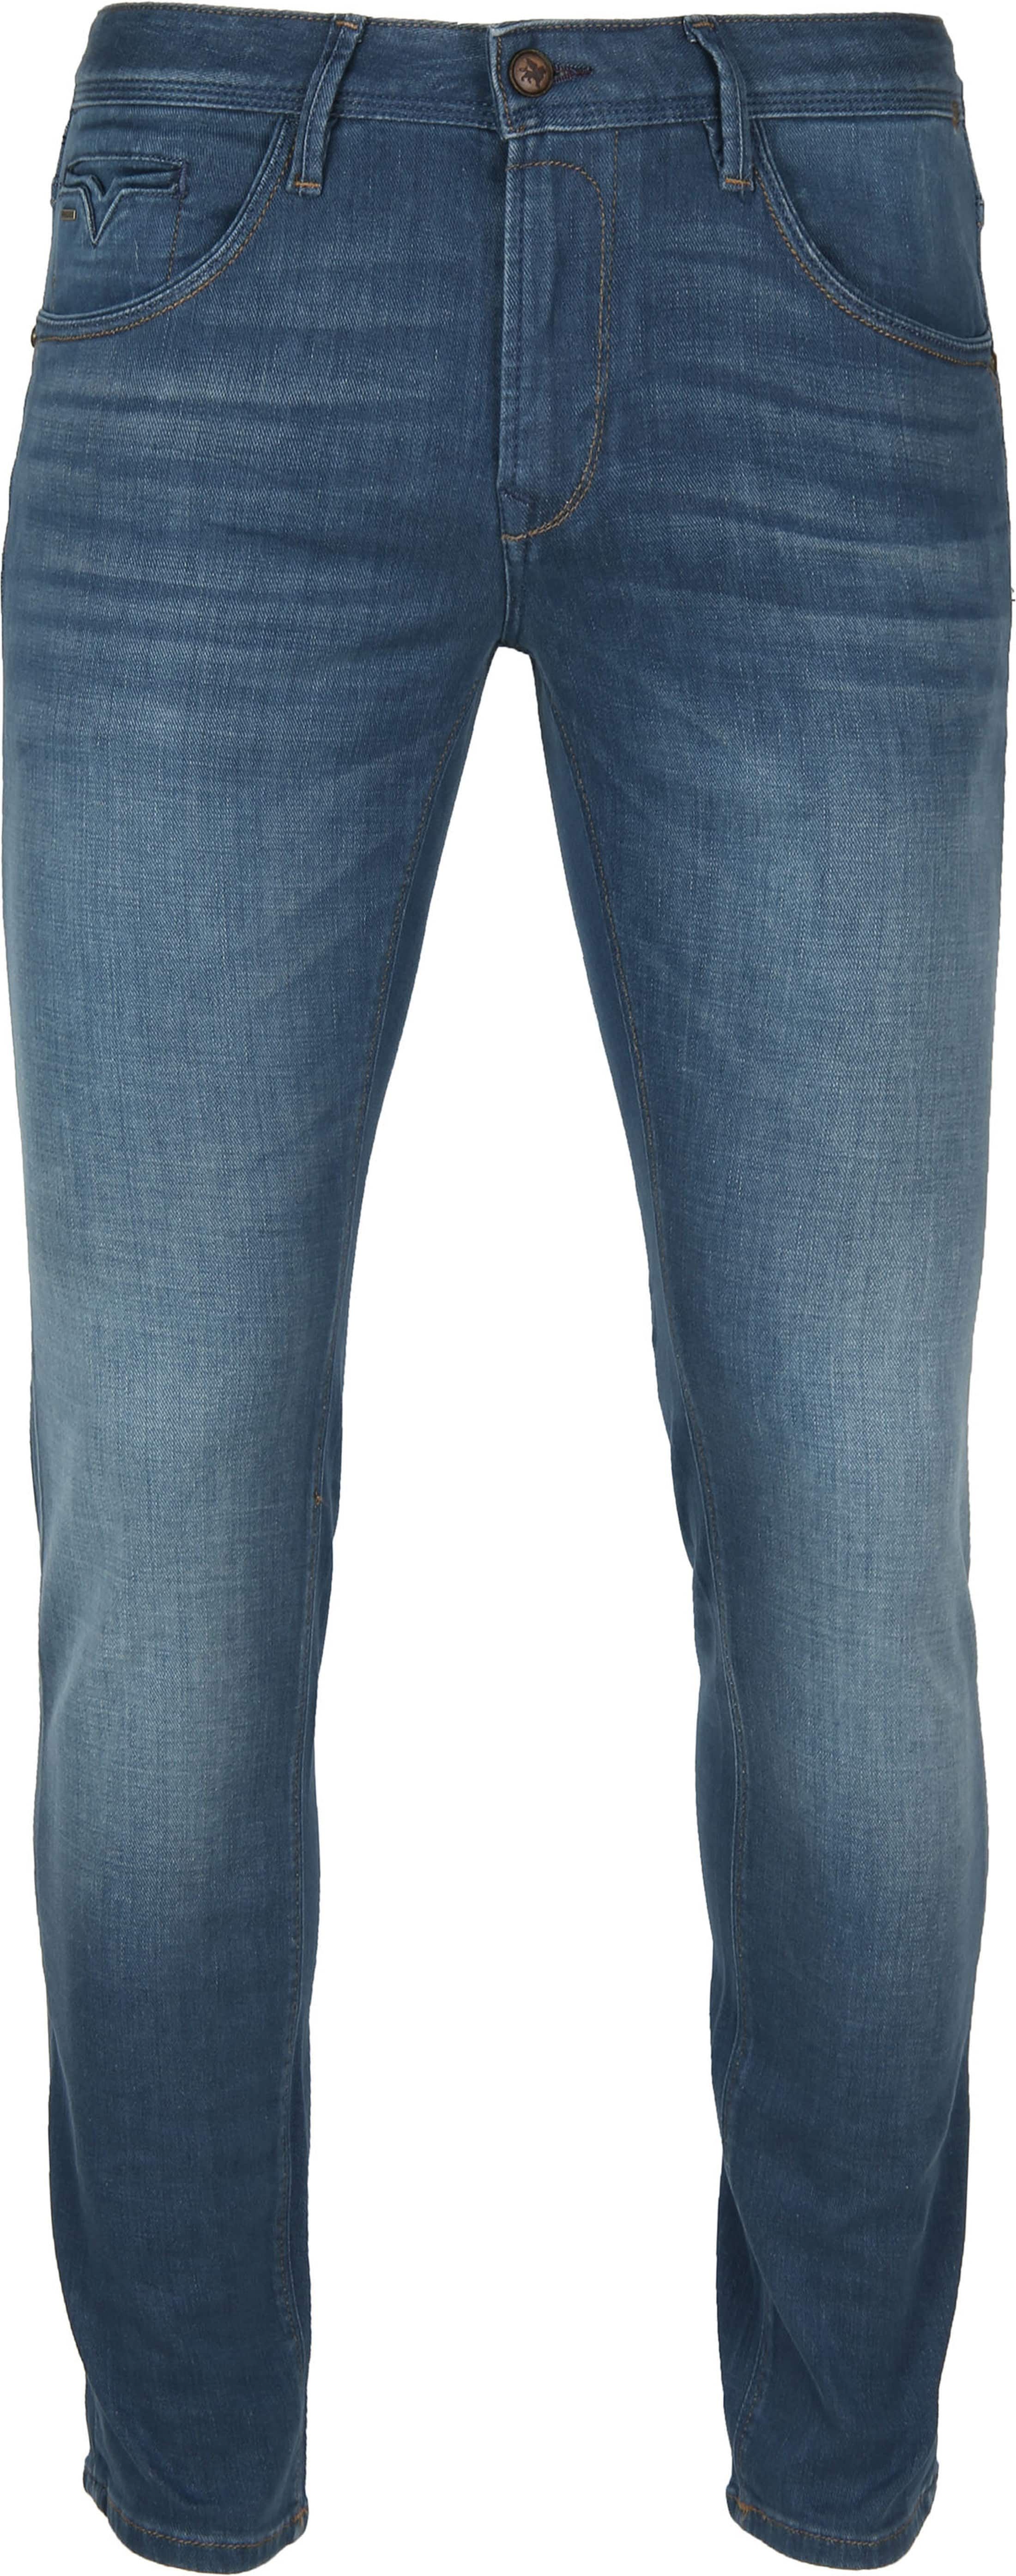 Vanguard V85 Scrambler Jeans SF Blue size W 32